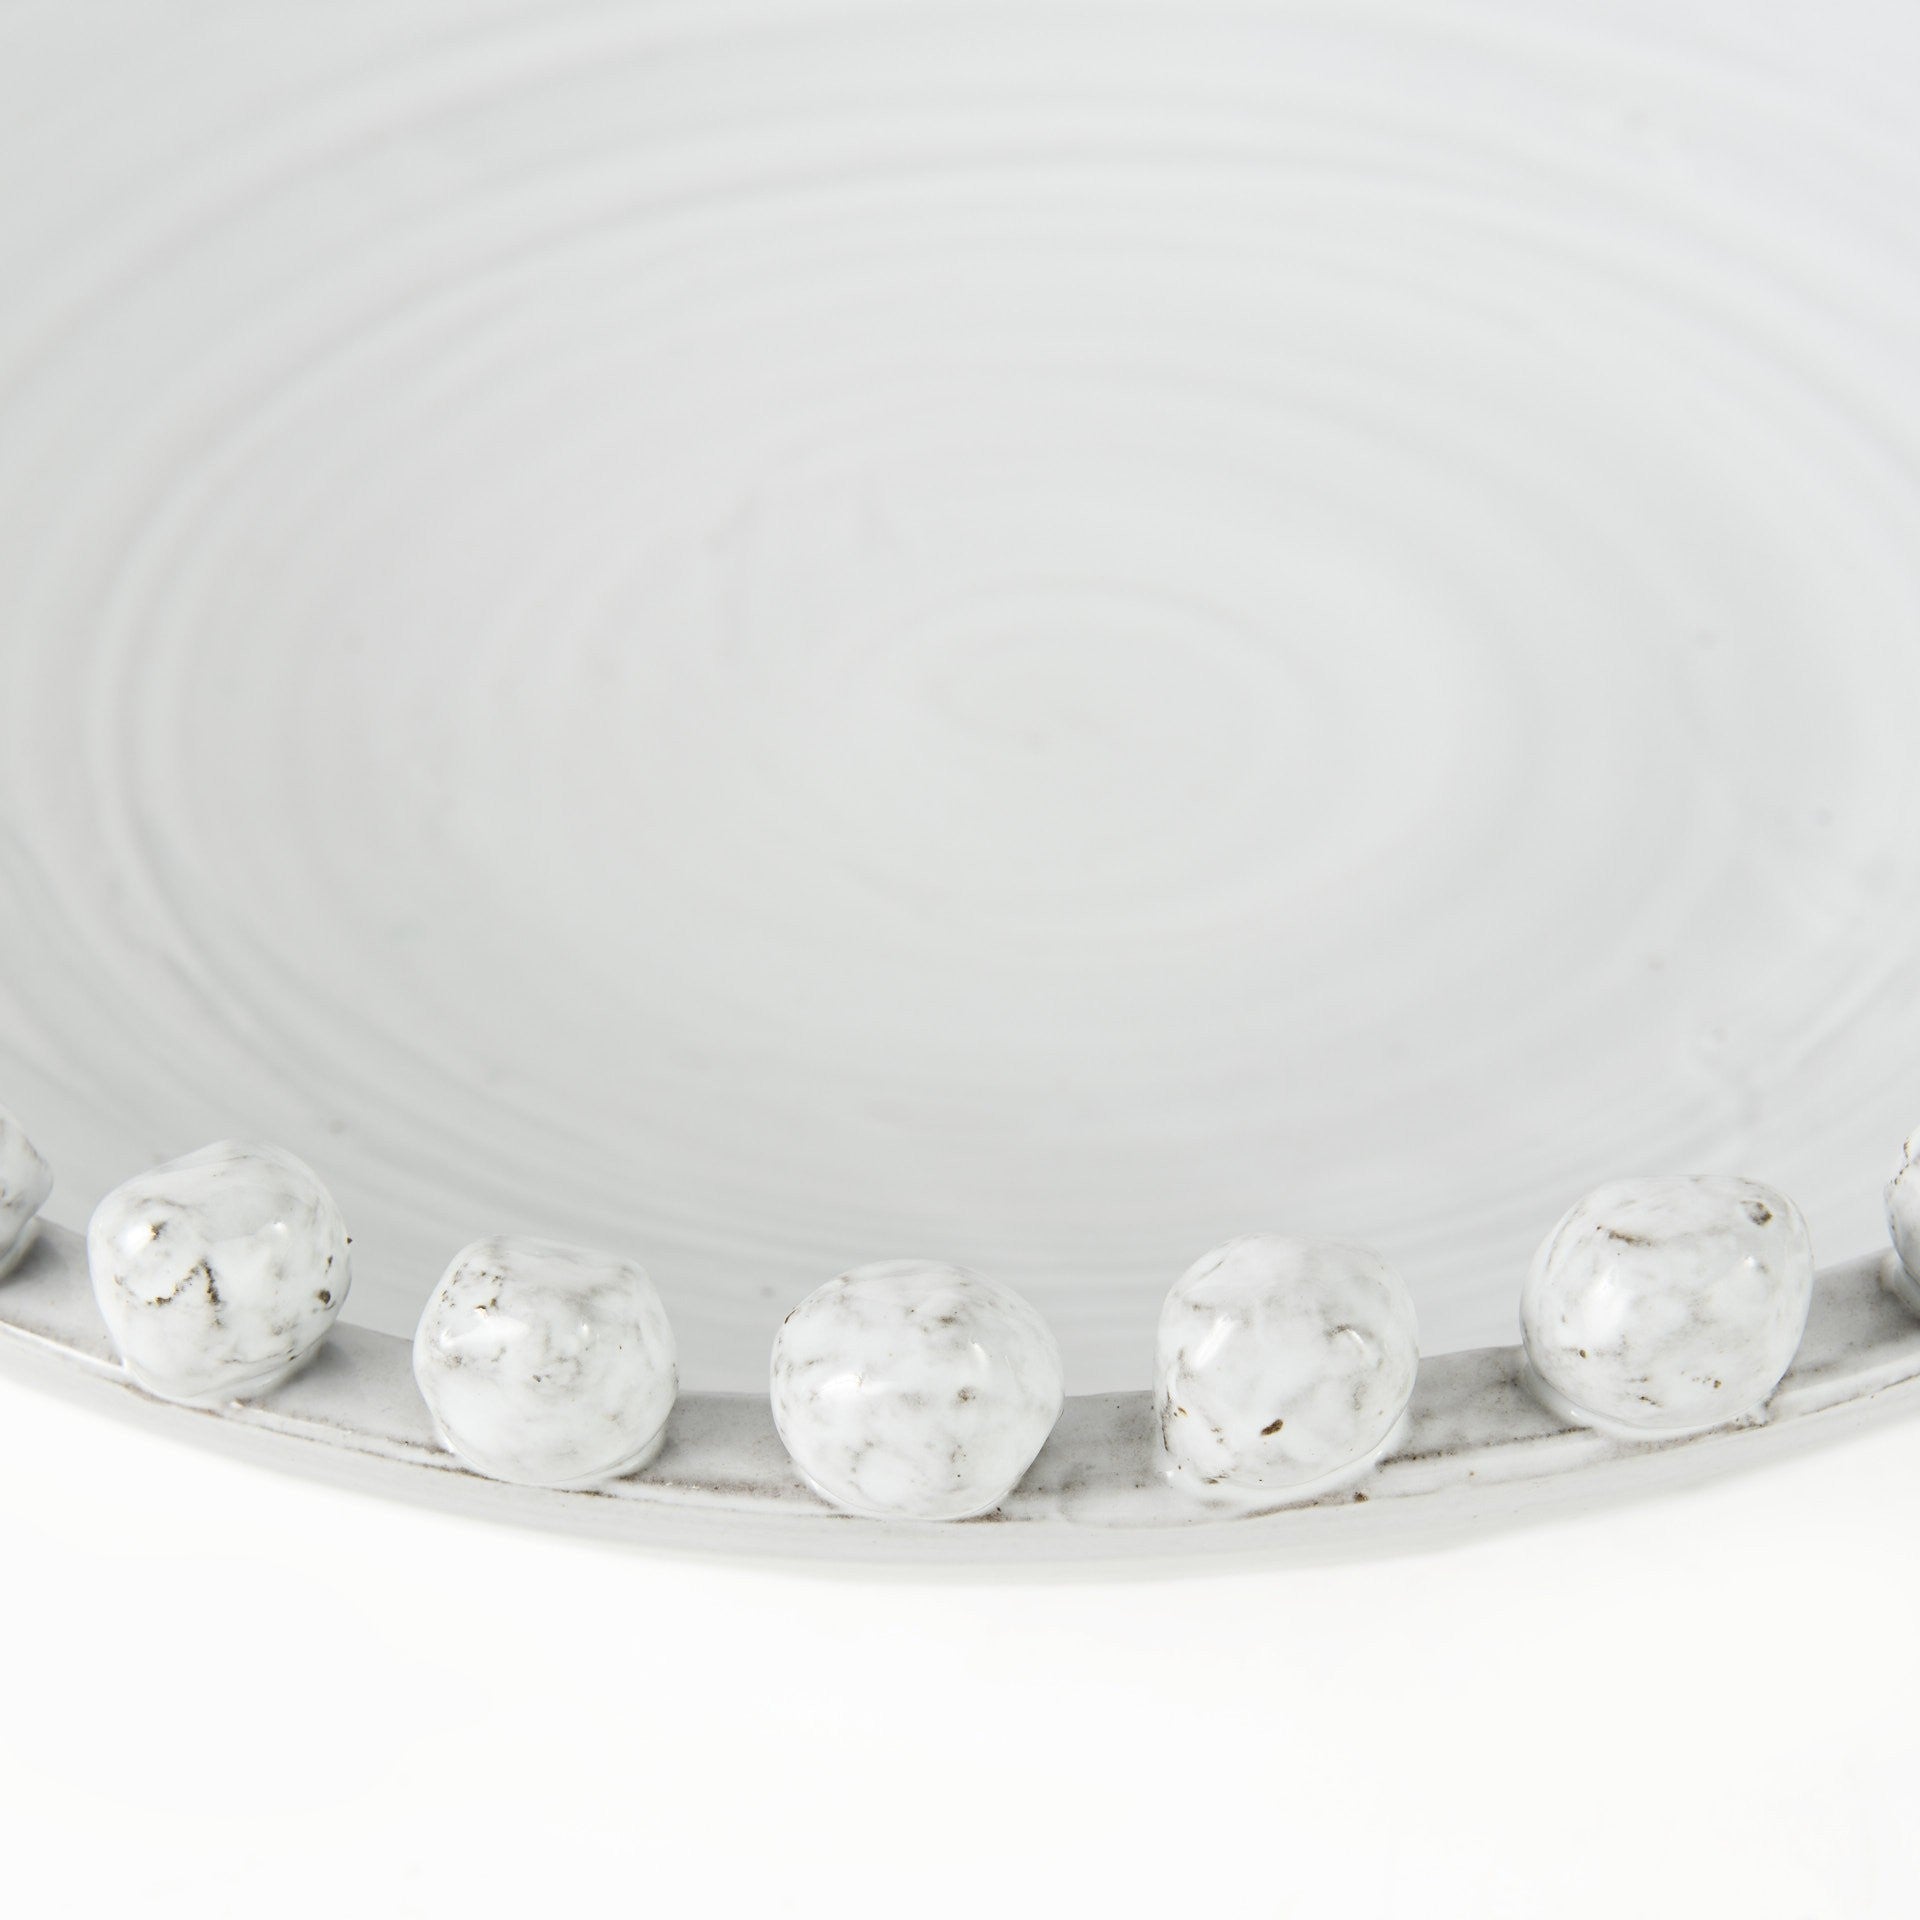 Off White Ceramic Centerpiece Bowl